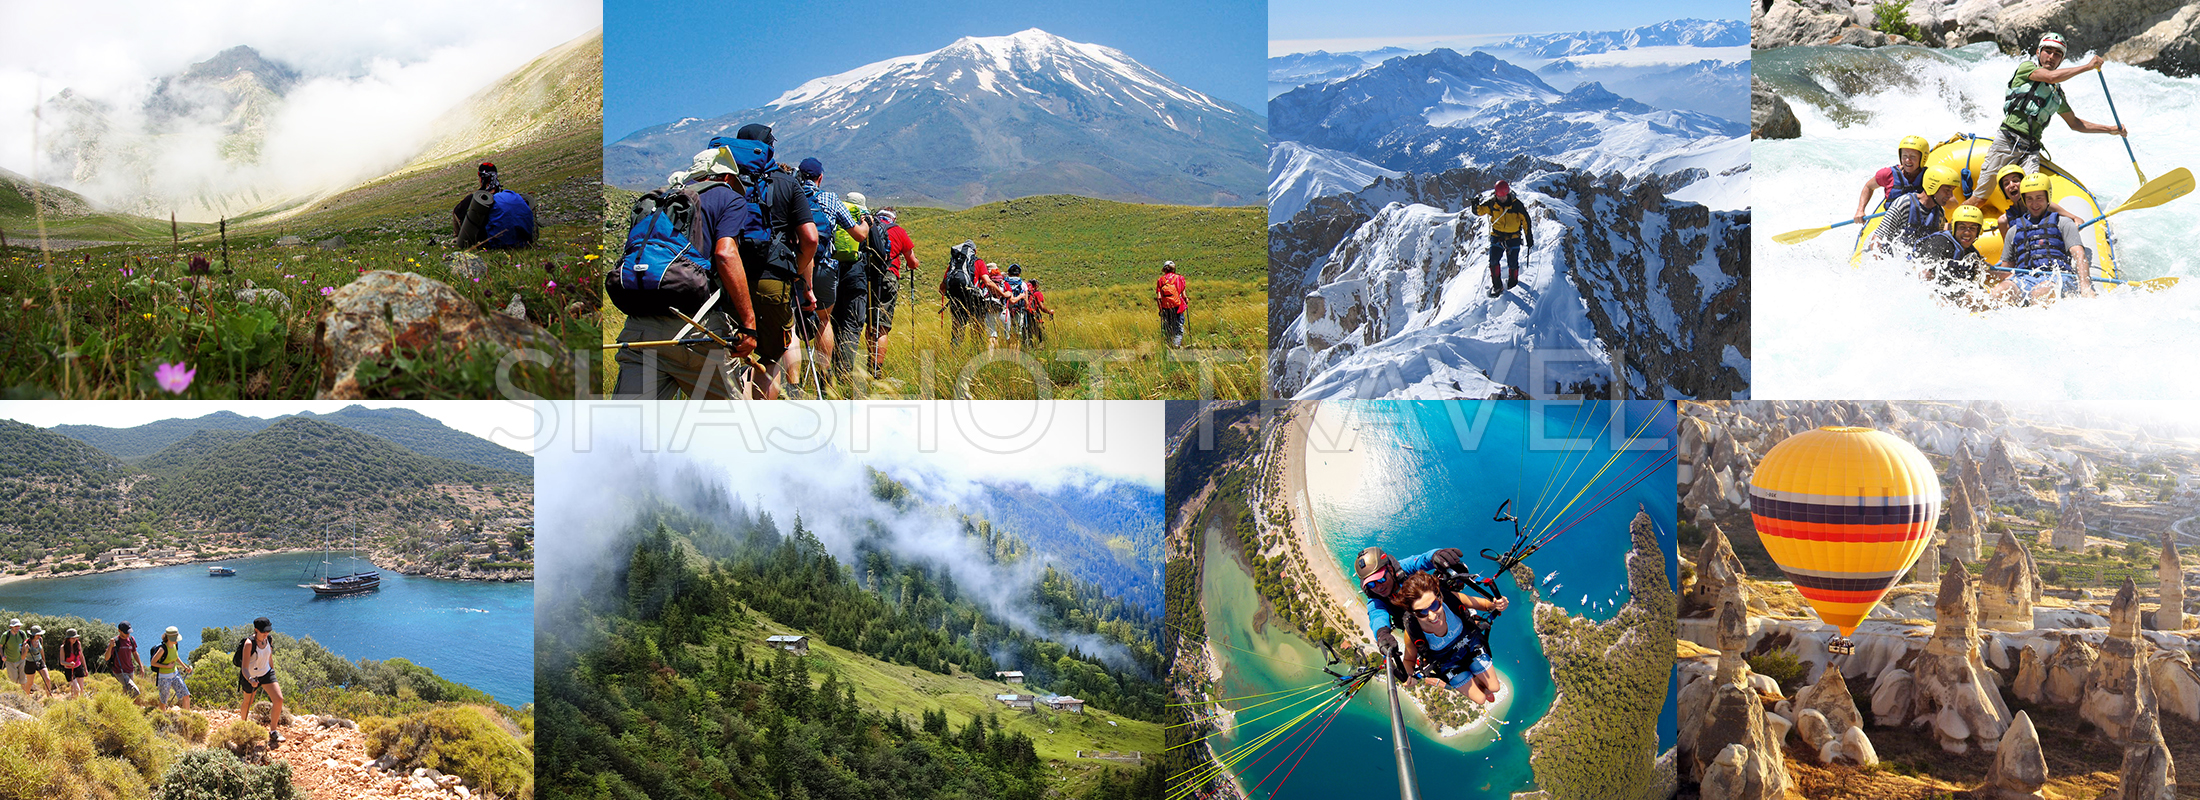 adventure-tours-turkey-rafting-hot-air-balloon-trekking-hiking-paragliding